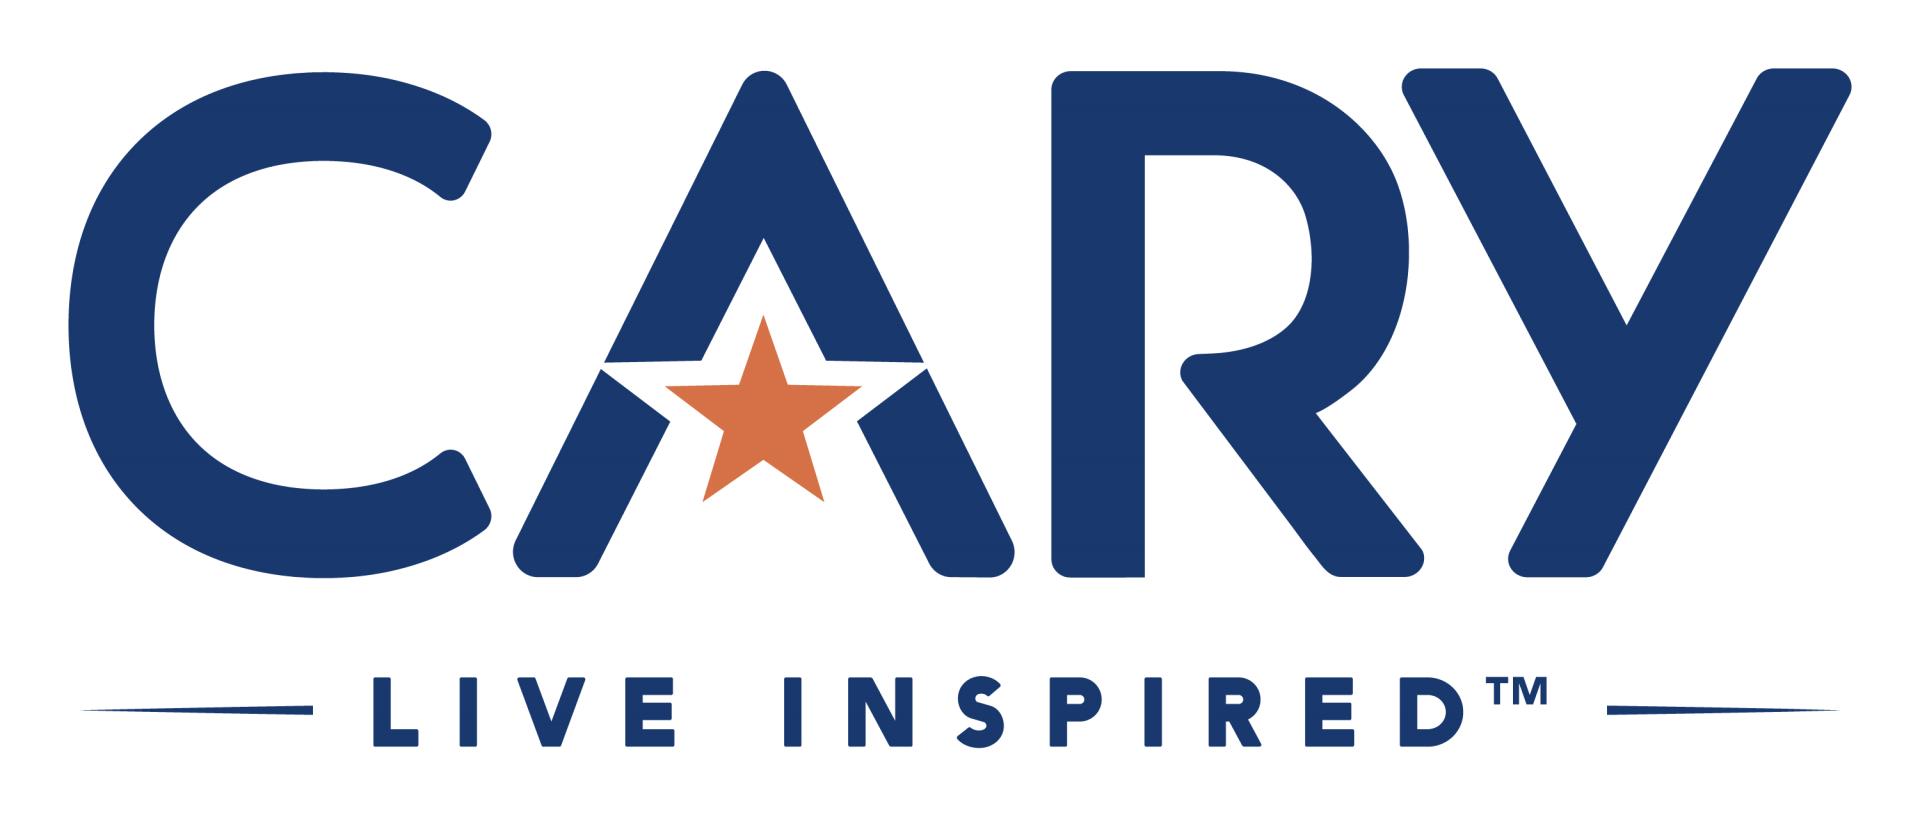 Cary logo sponsor